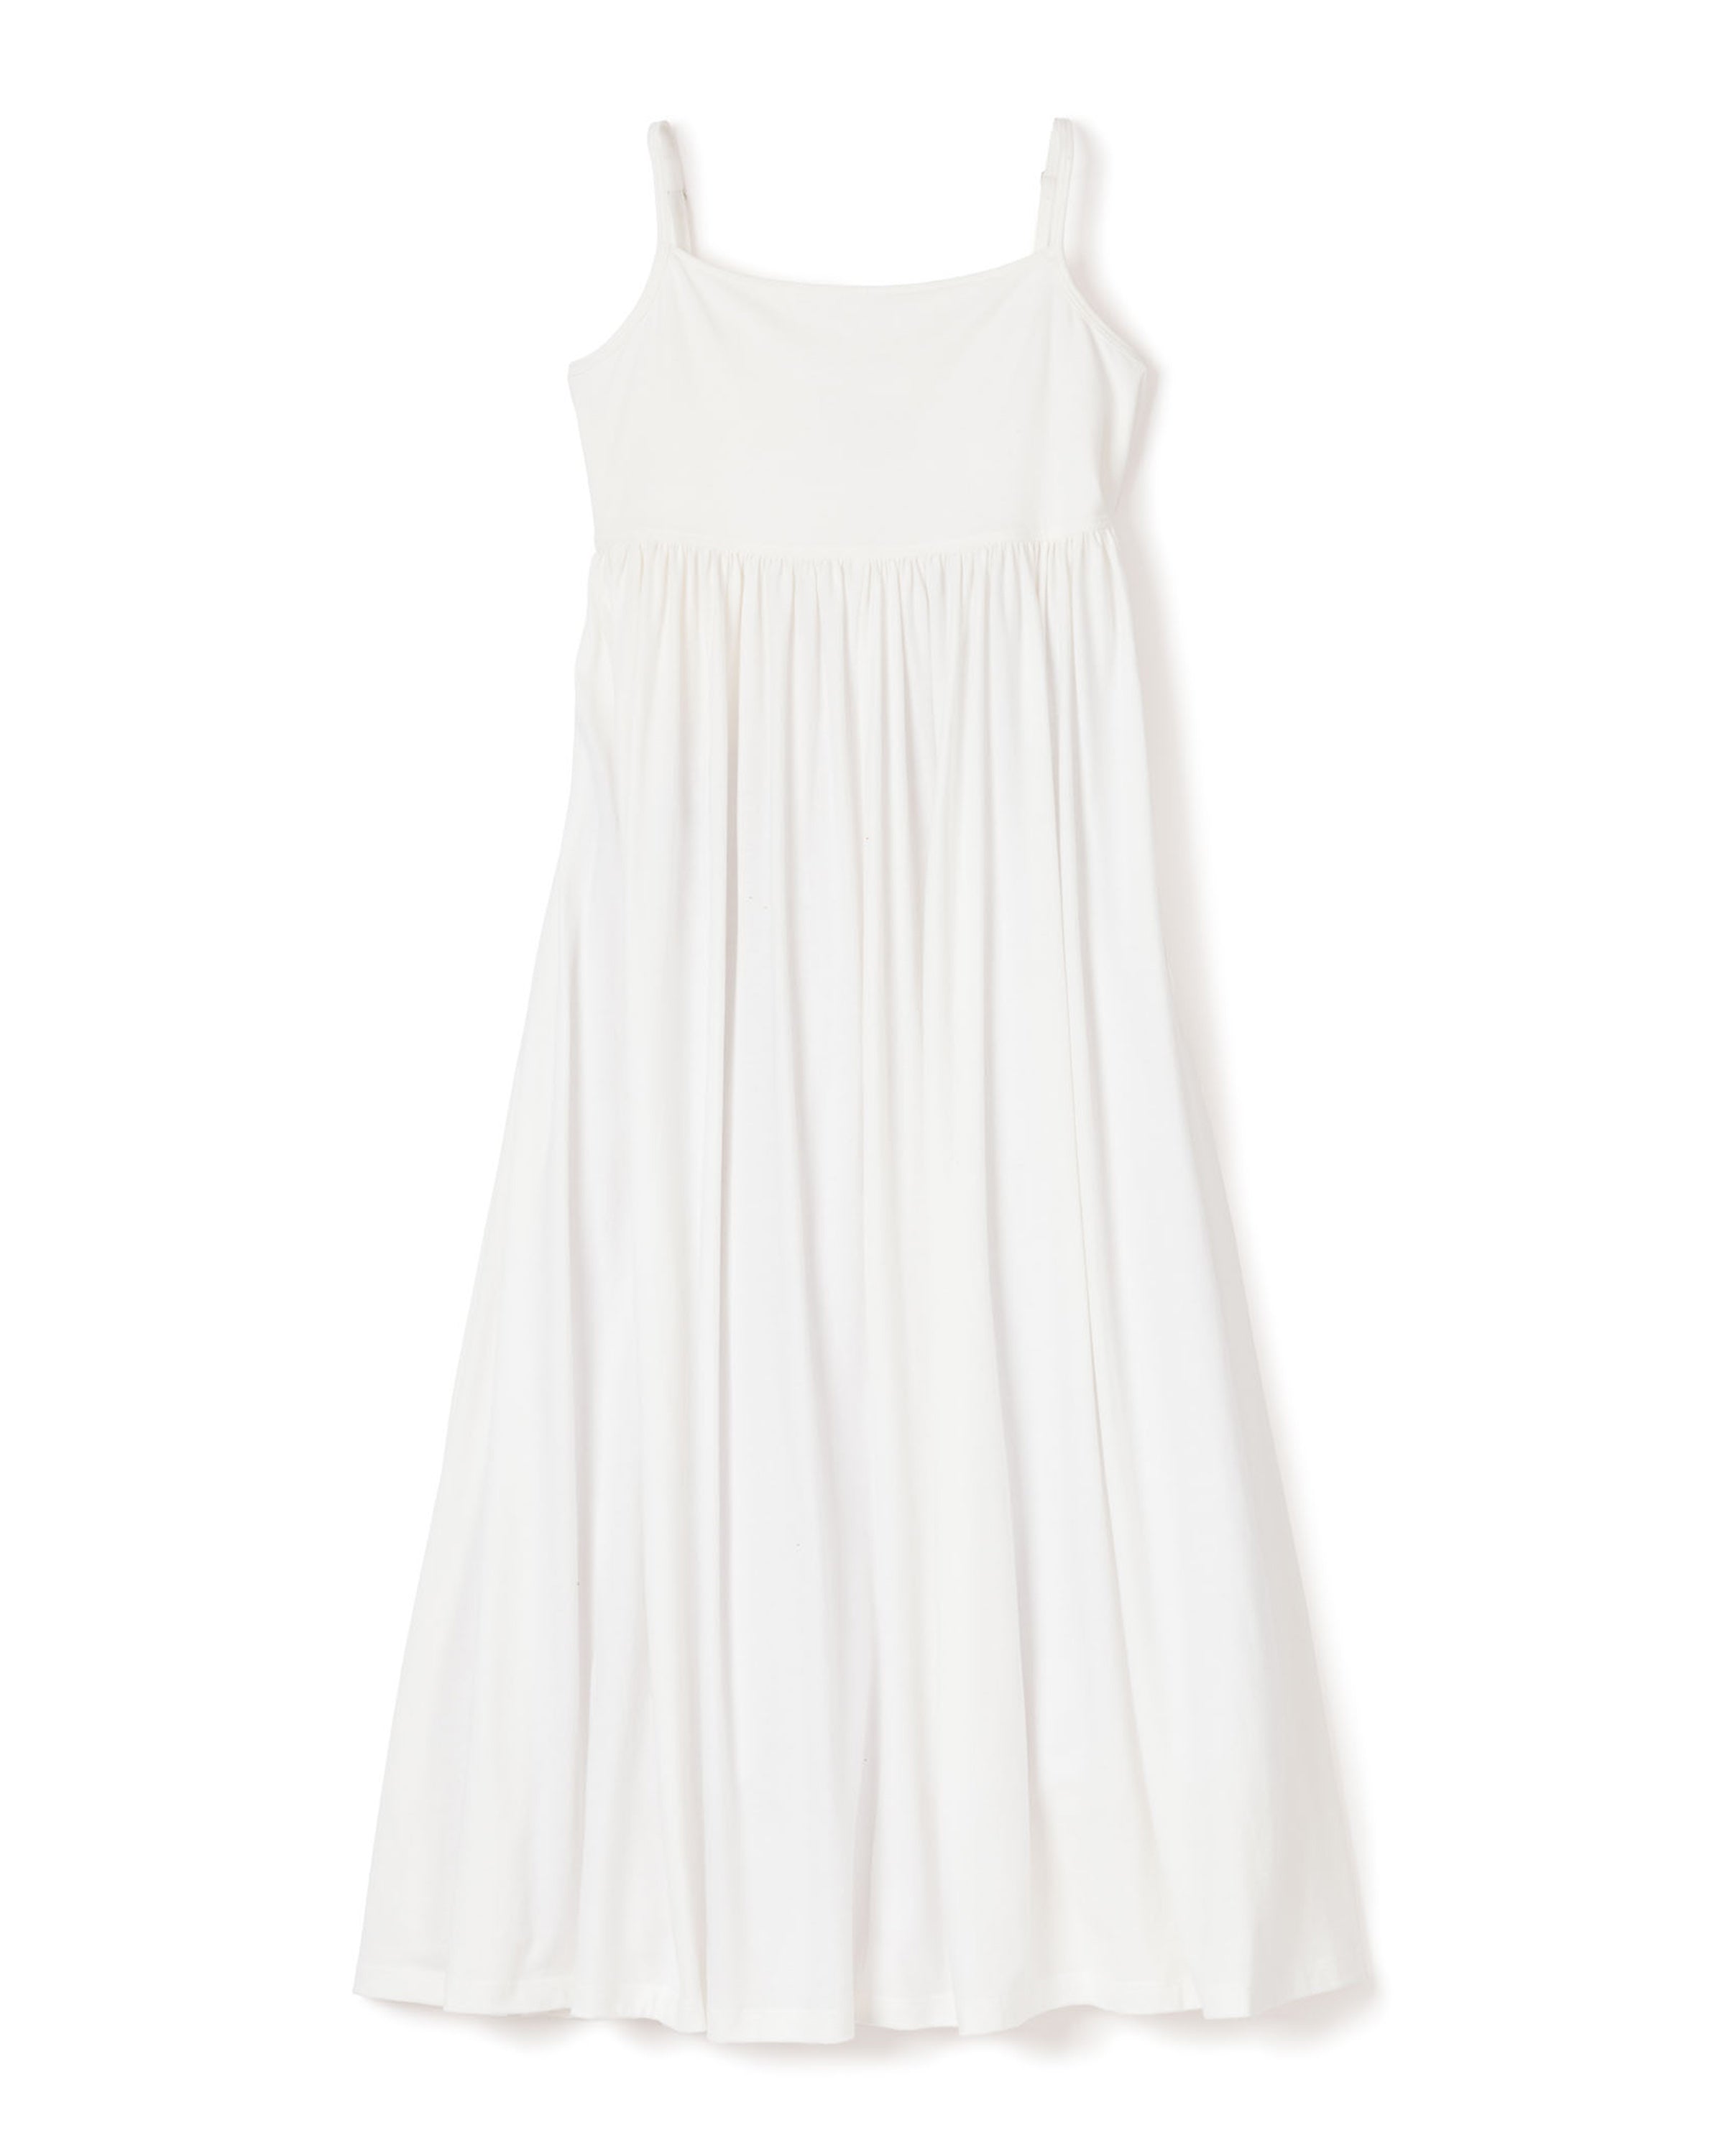 Women's Pima Serene Lounge Dress in White